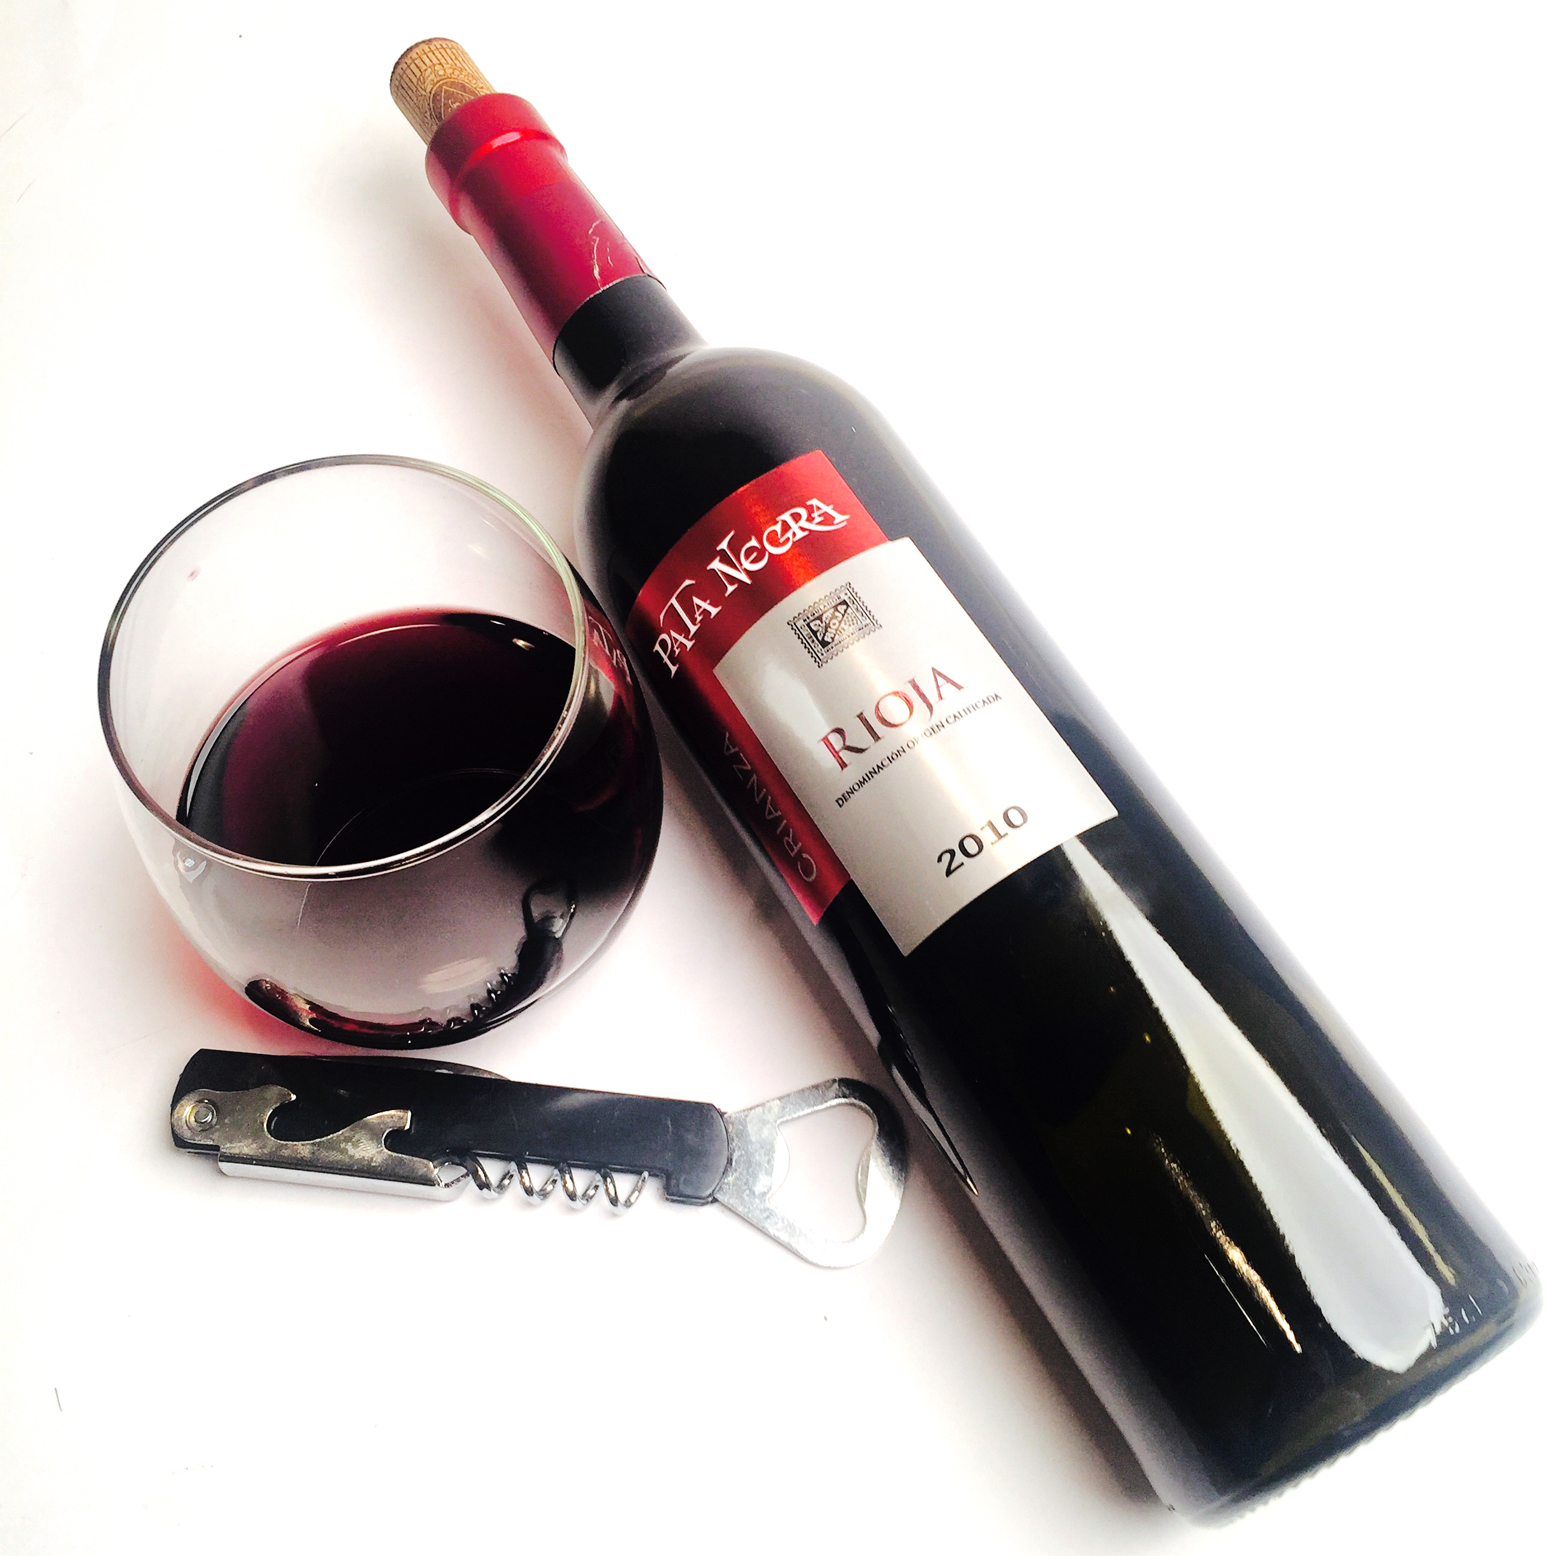 Celebrating Tempranillo day with Rioja Wine